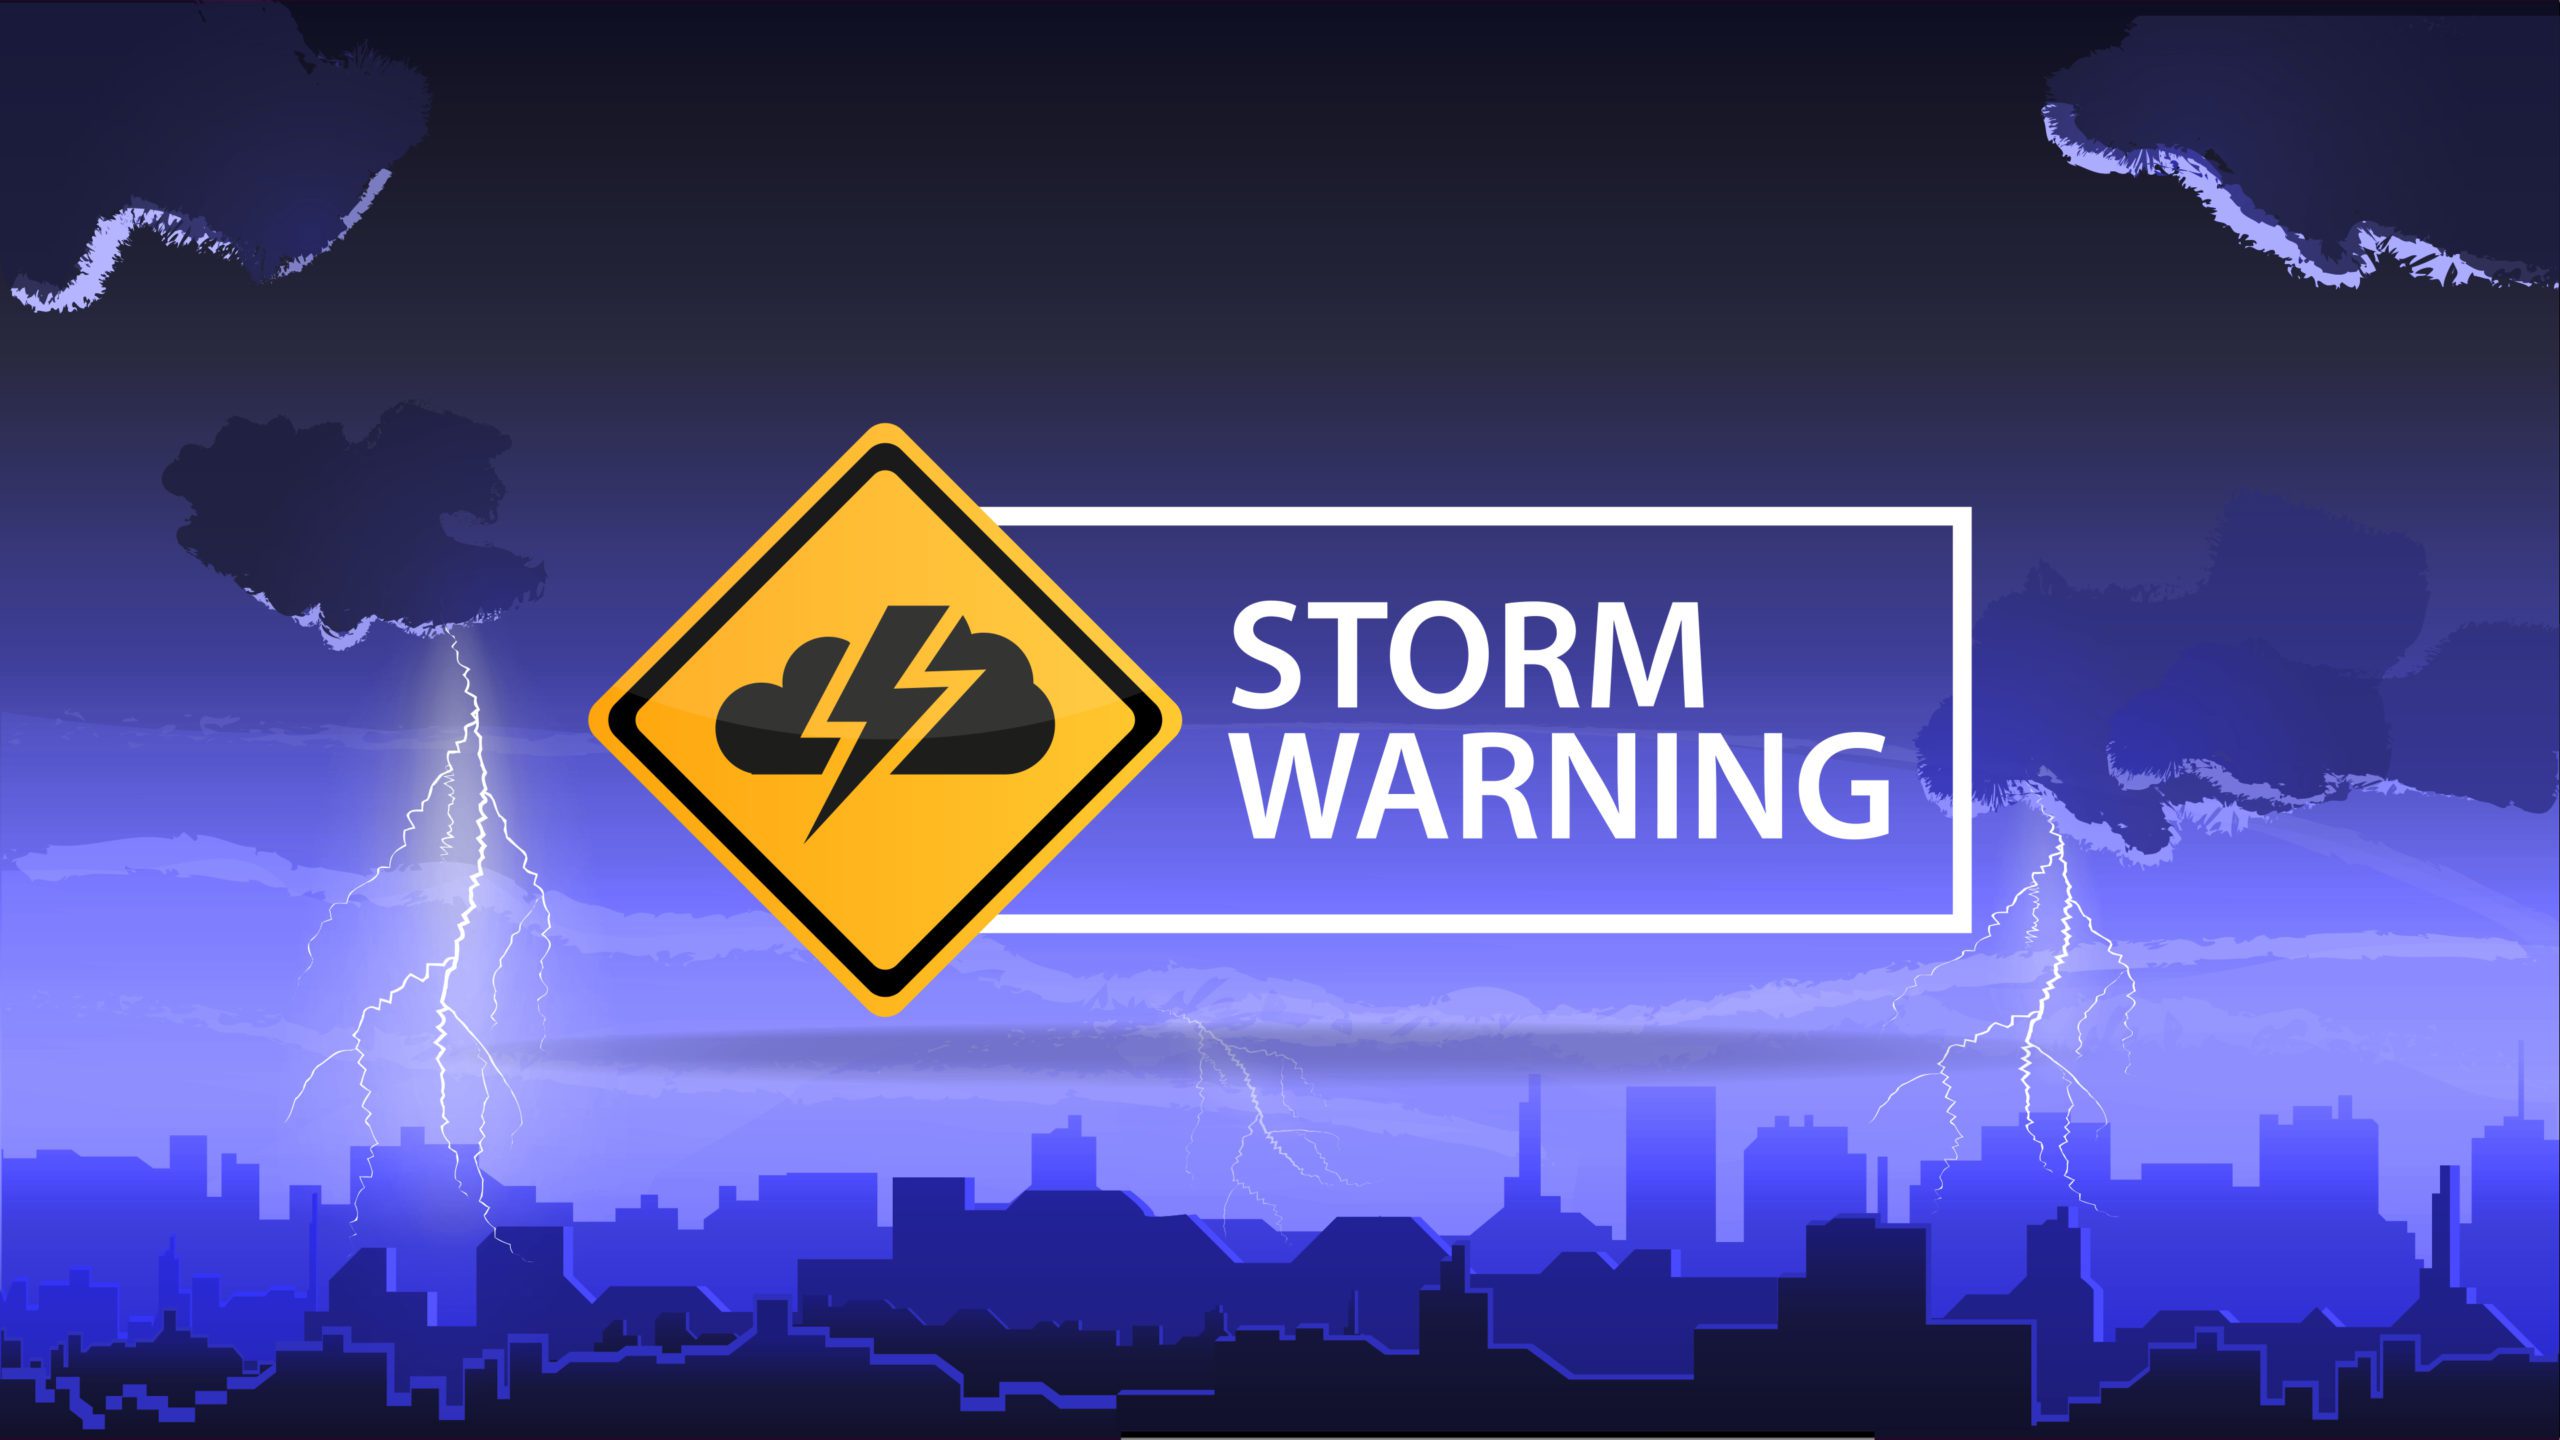 Storm warning